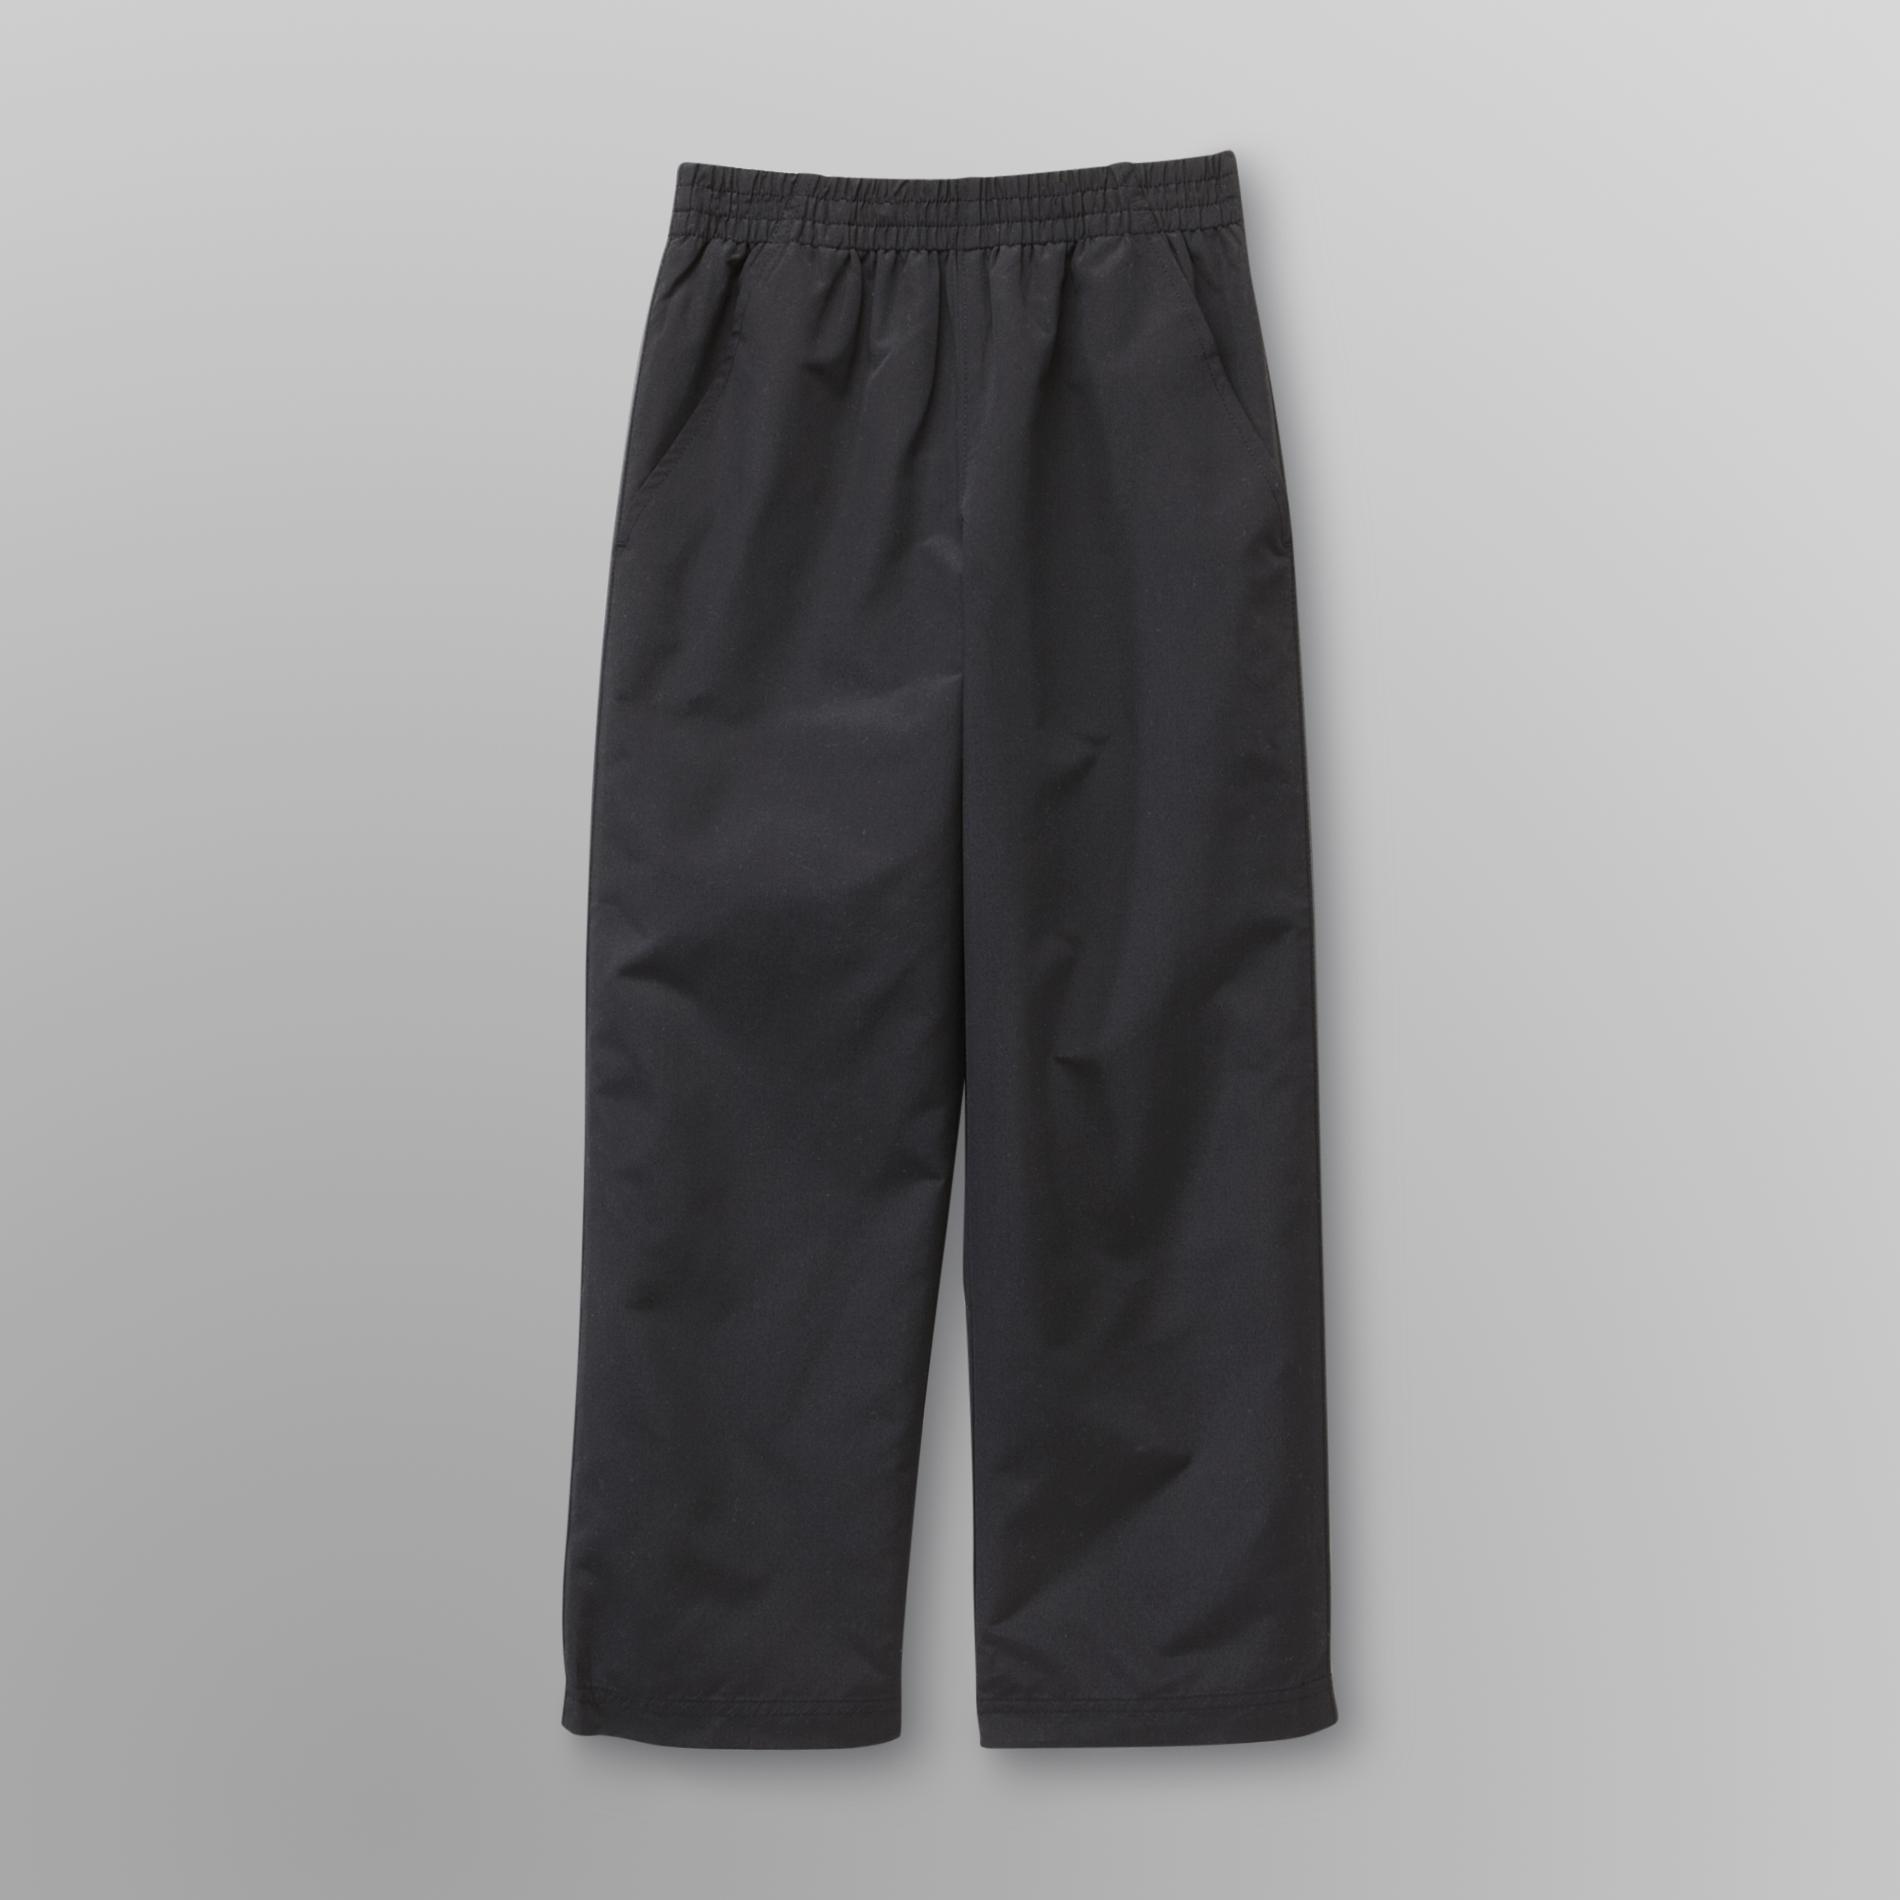 Basic Editions Boy's Microfiber Athletic Pants